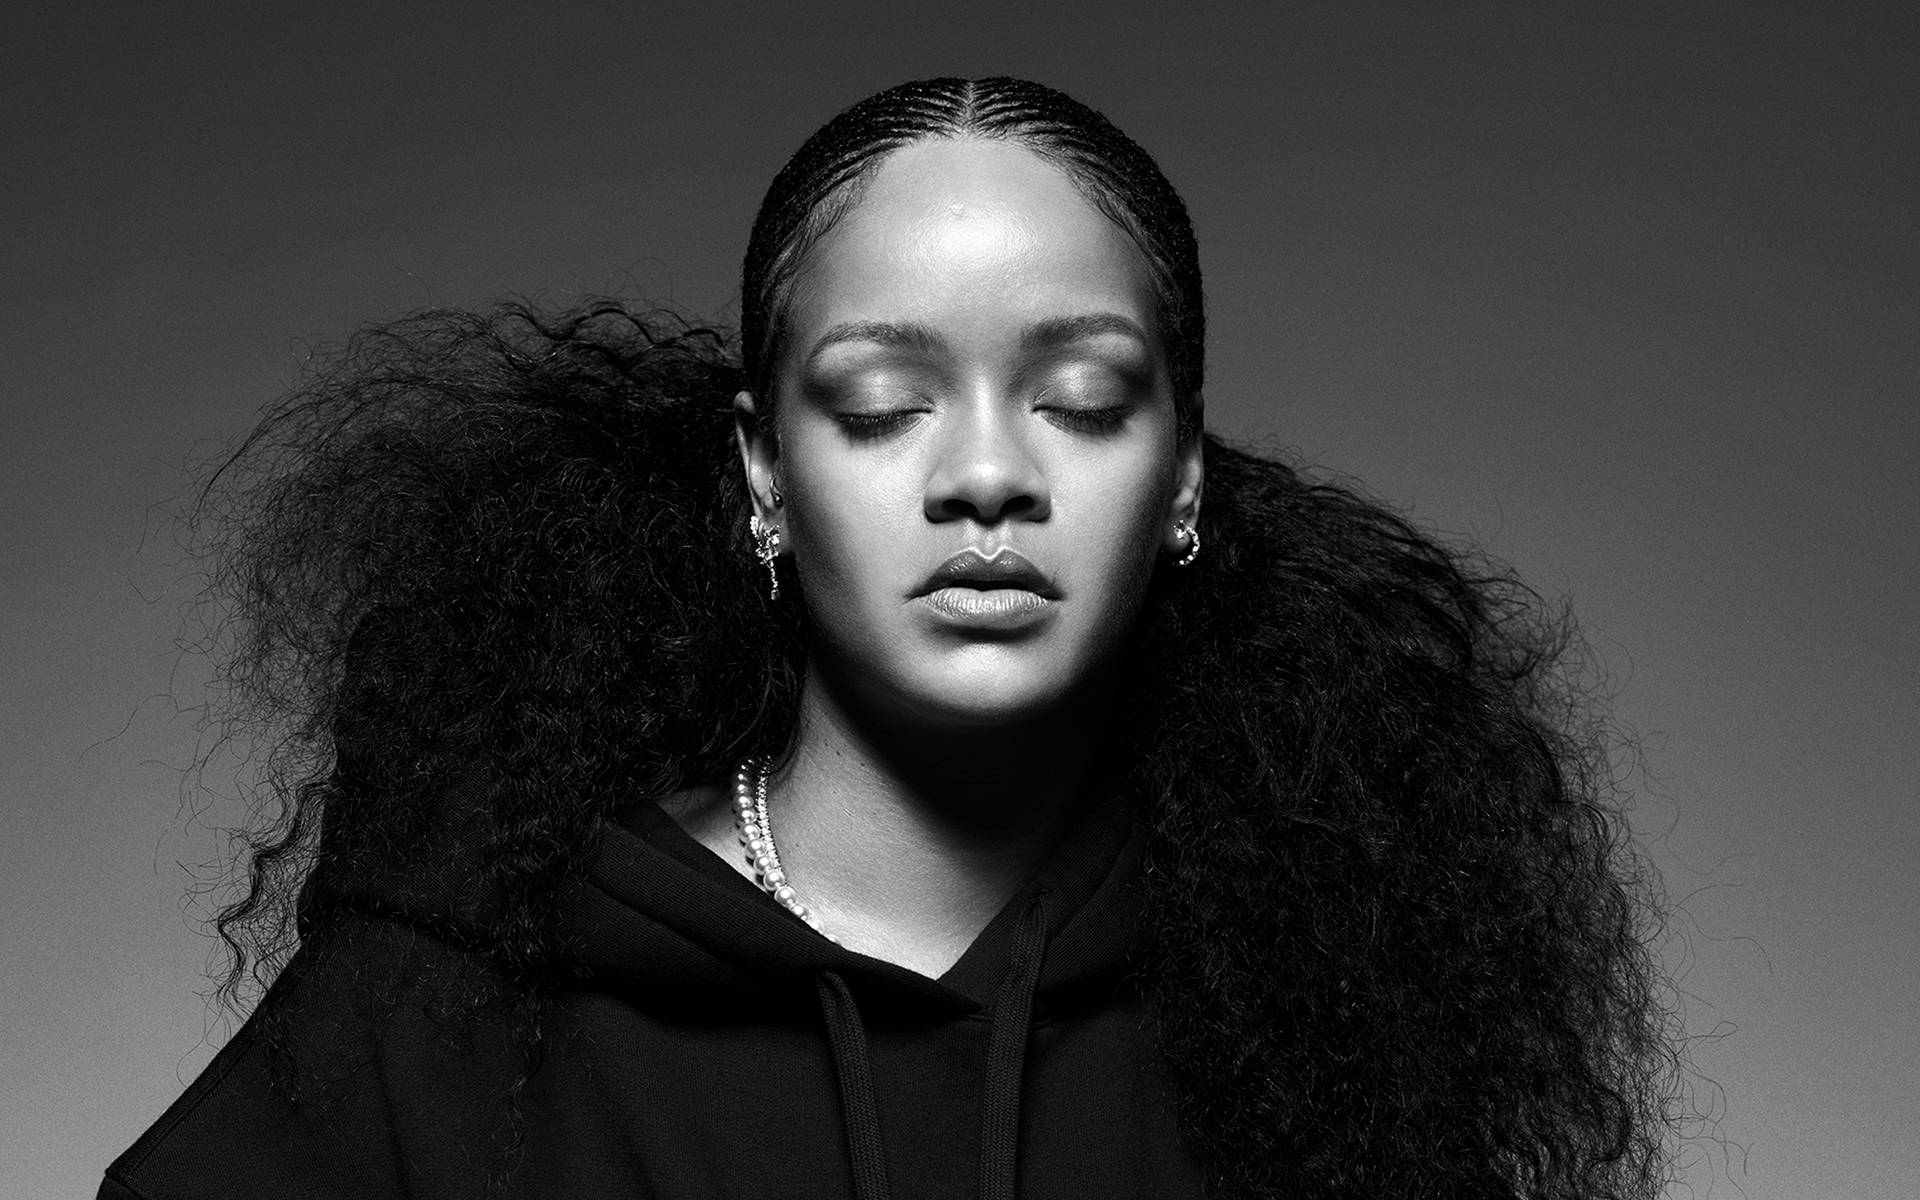 Rihanna's new album is coming soon - Rihanna